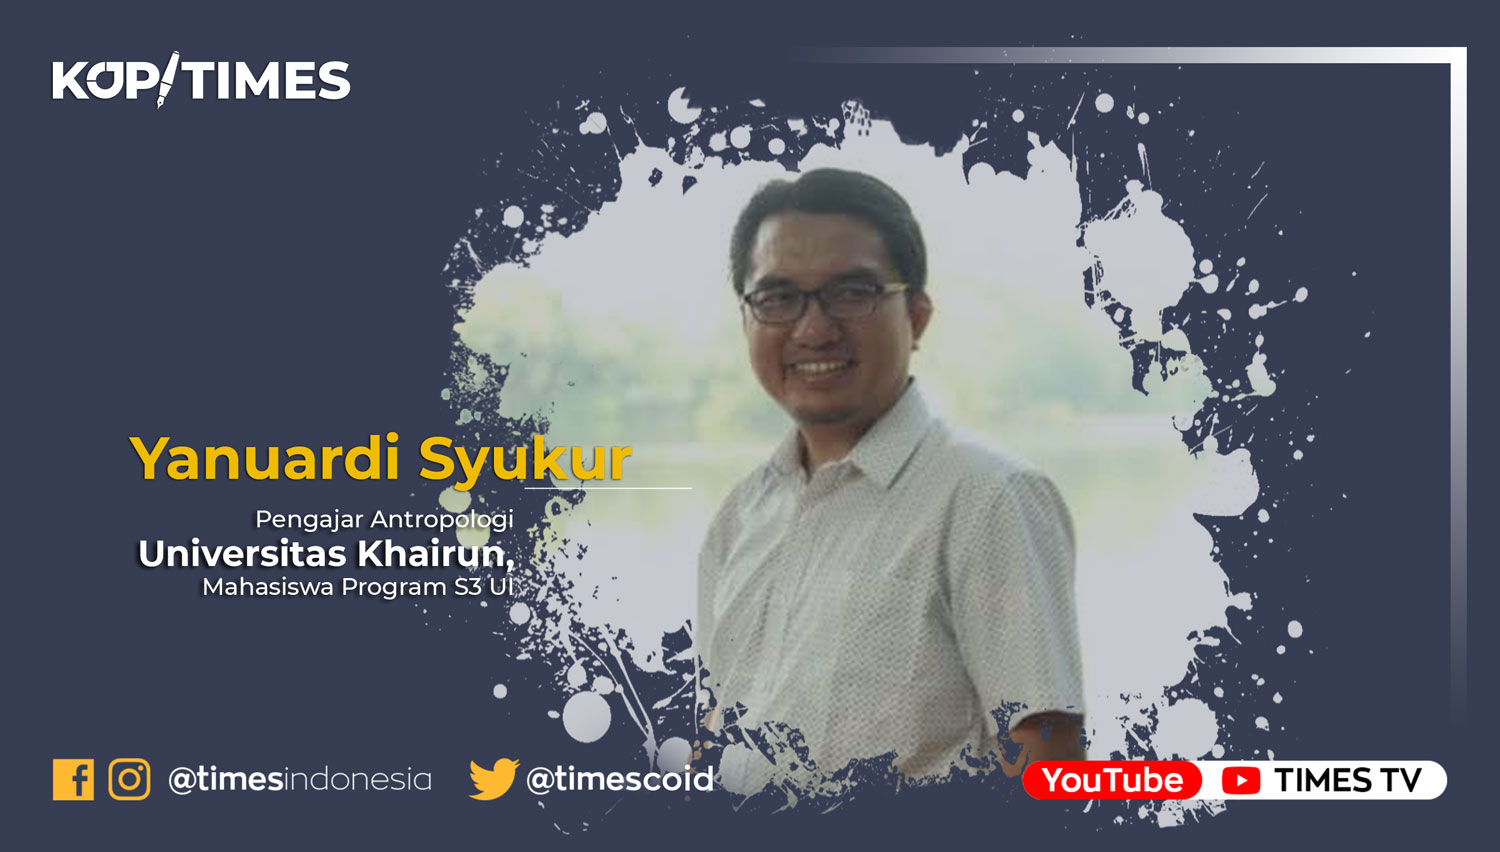 Yanuardi Syukur, Pengajar Antropologi Universitas Khairun, Mahasiswa Program S3 UI